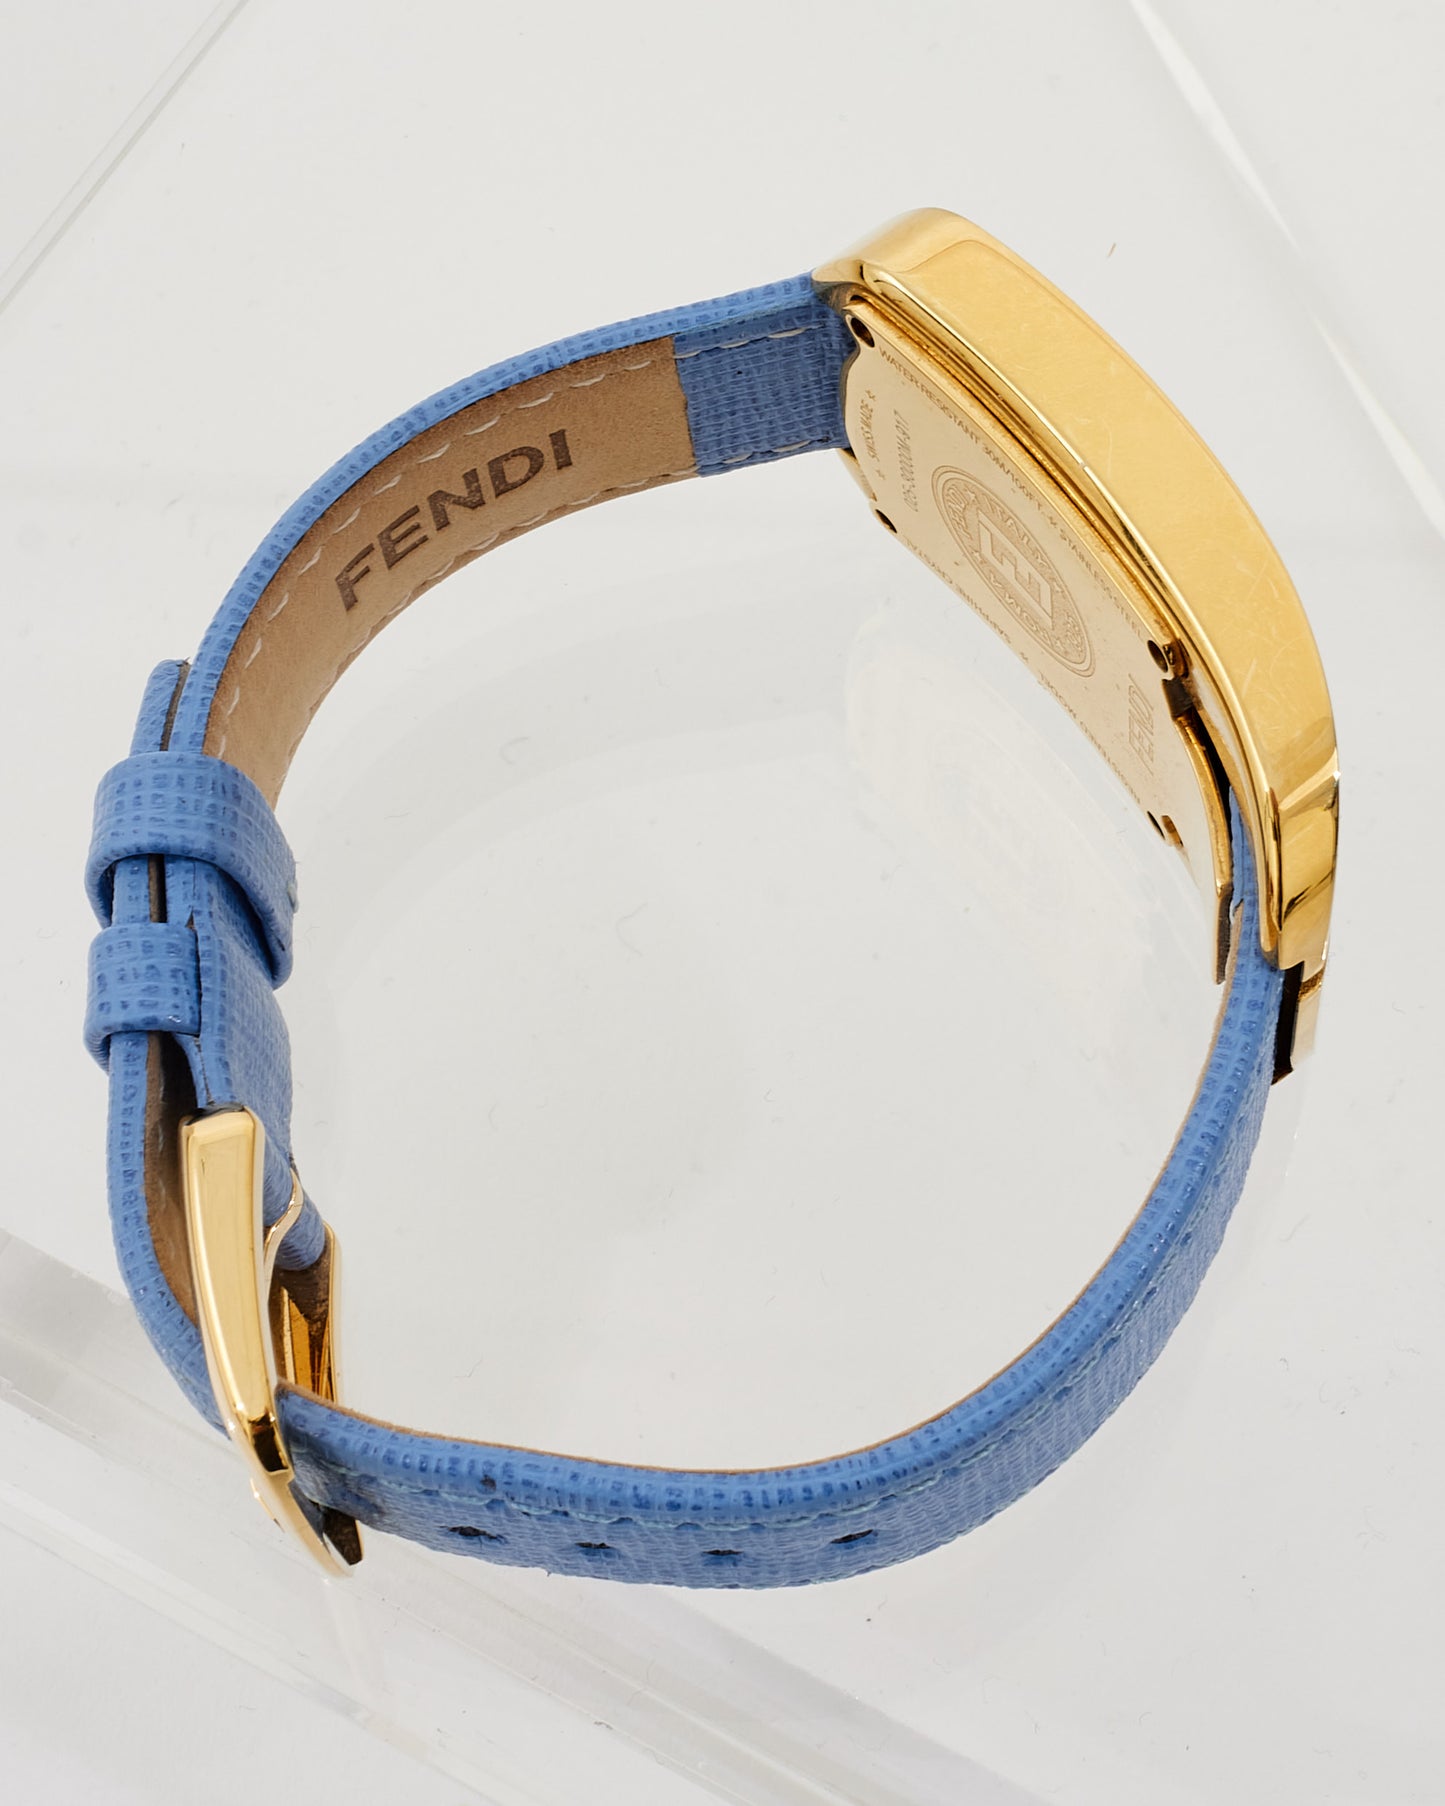 Fendi Gold/Blue Leather Chameleon Gold-Tone Quartz Watch